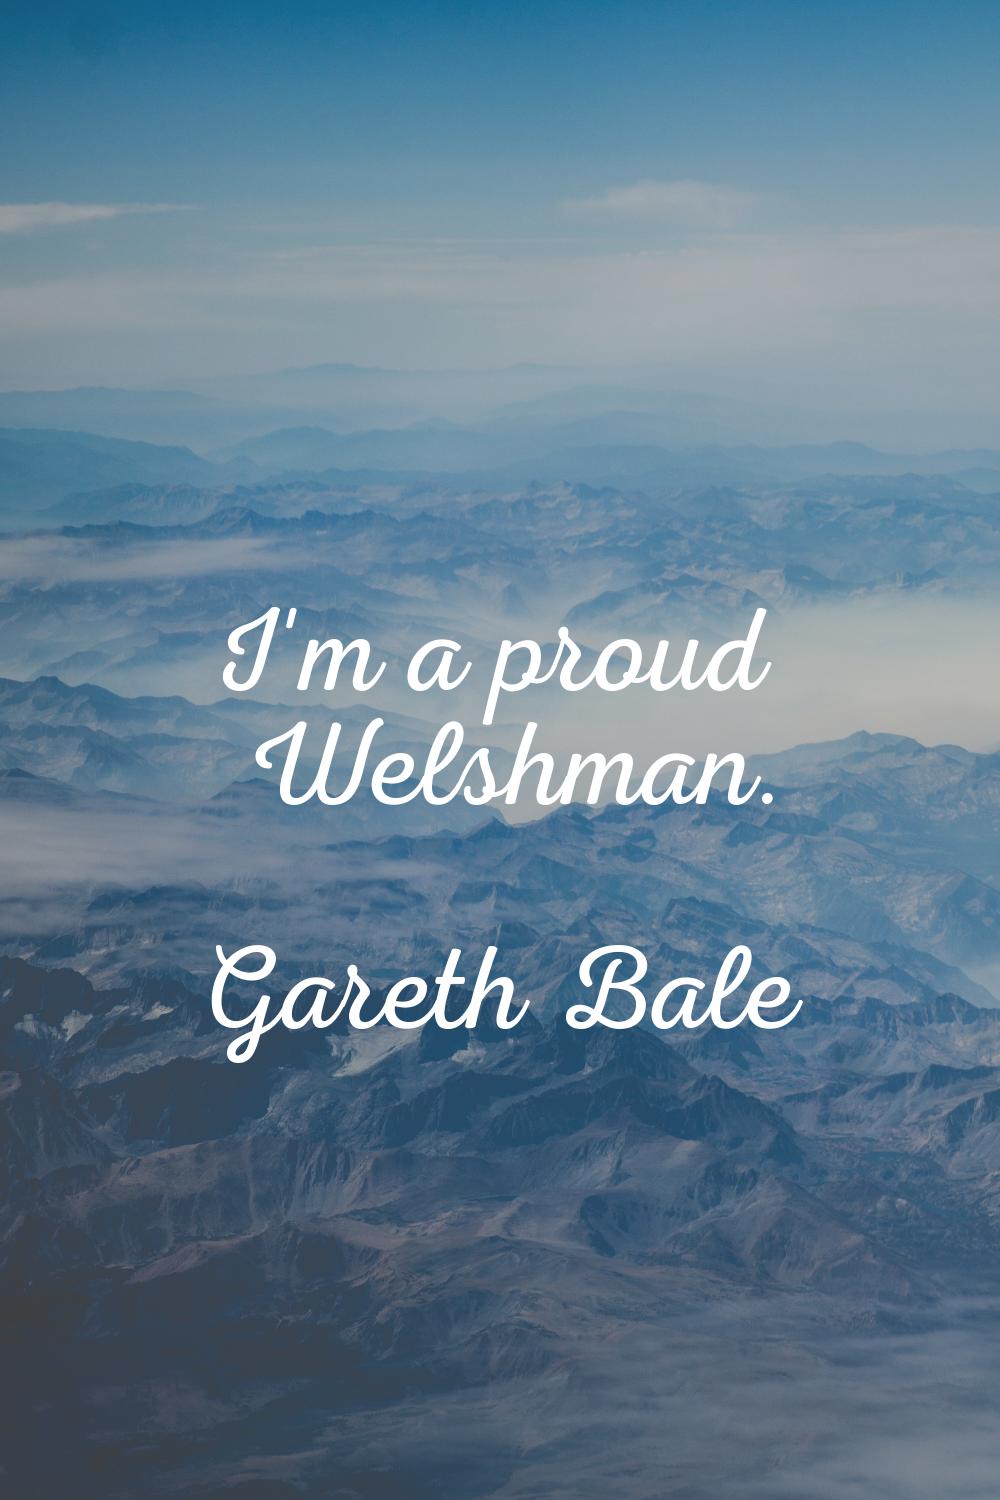 I'm a proud Welshman.